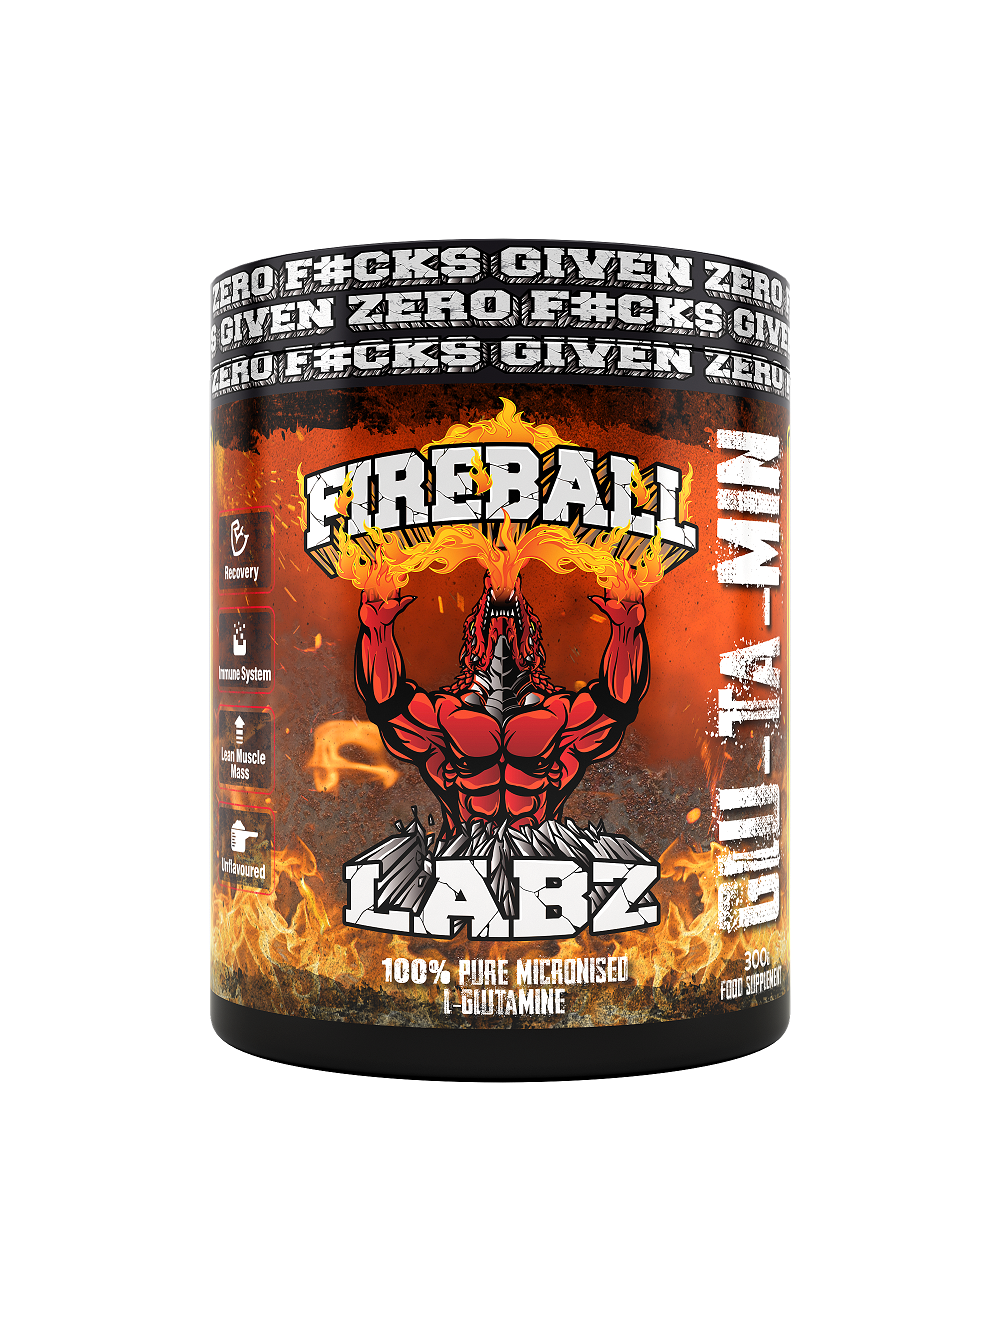 Fireball Labz Glu-Ta-Min 300g - gymstop